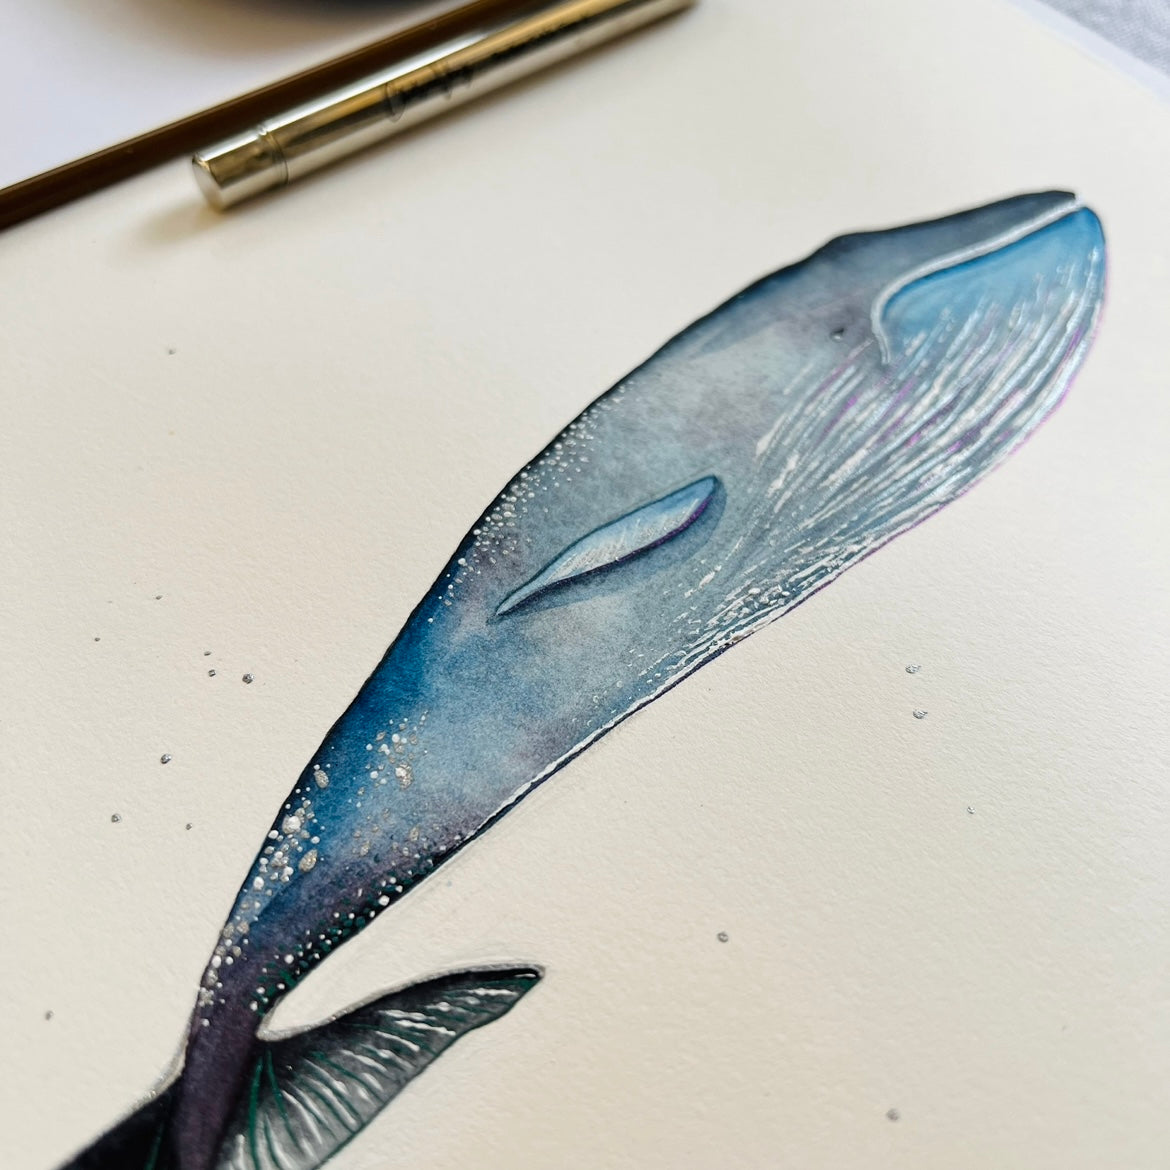 Electric Blue Whale Watercolour Illustration Print